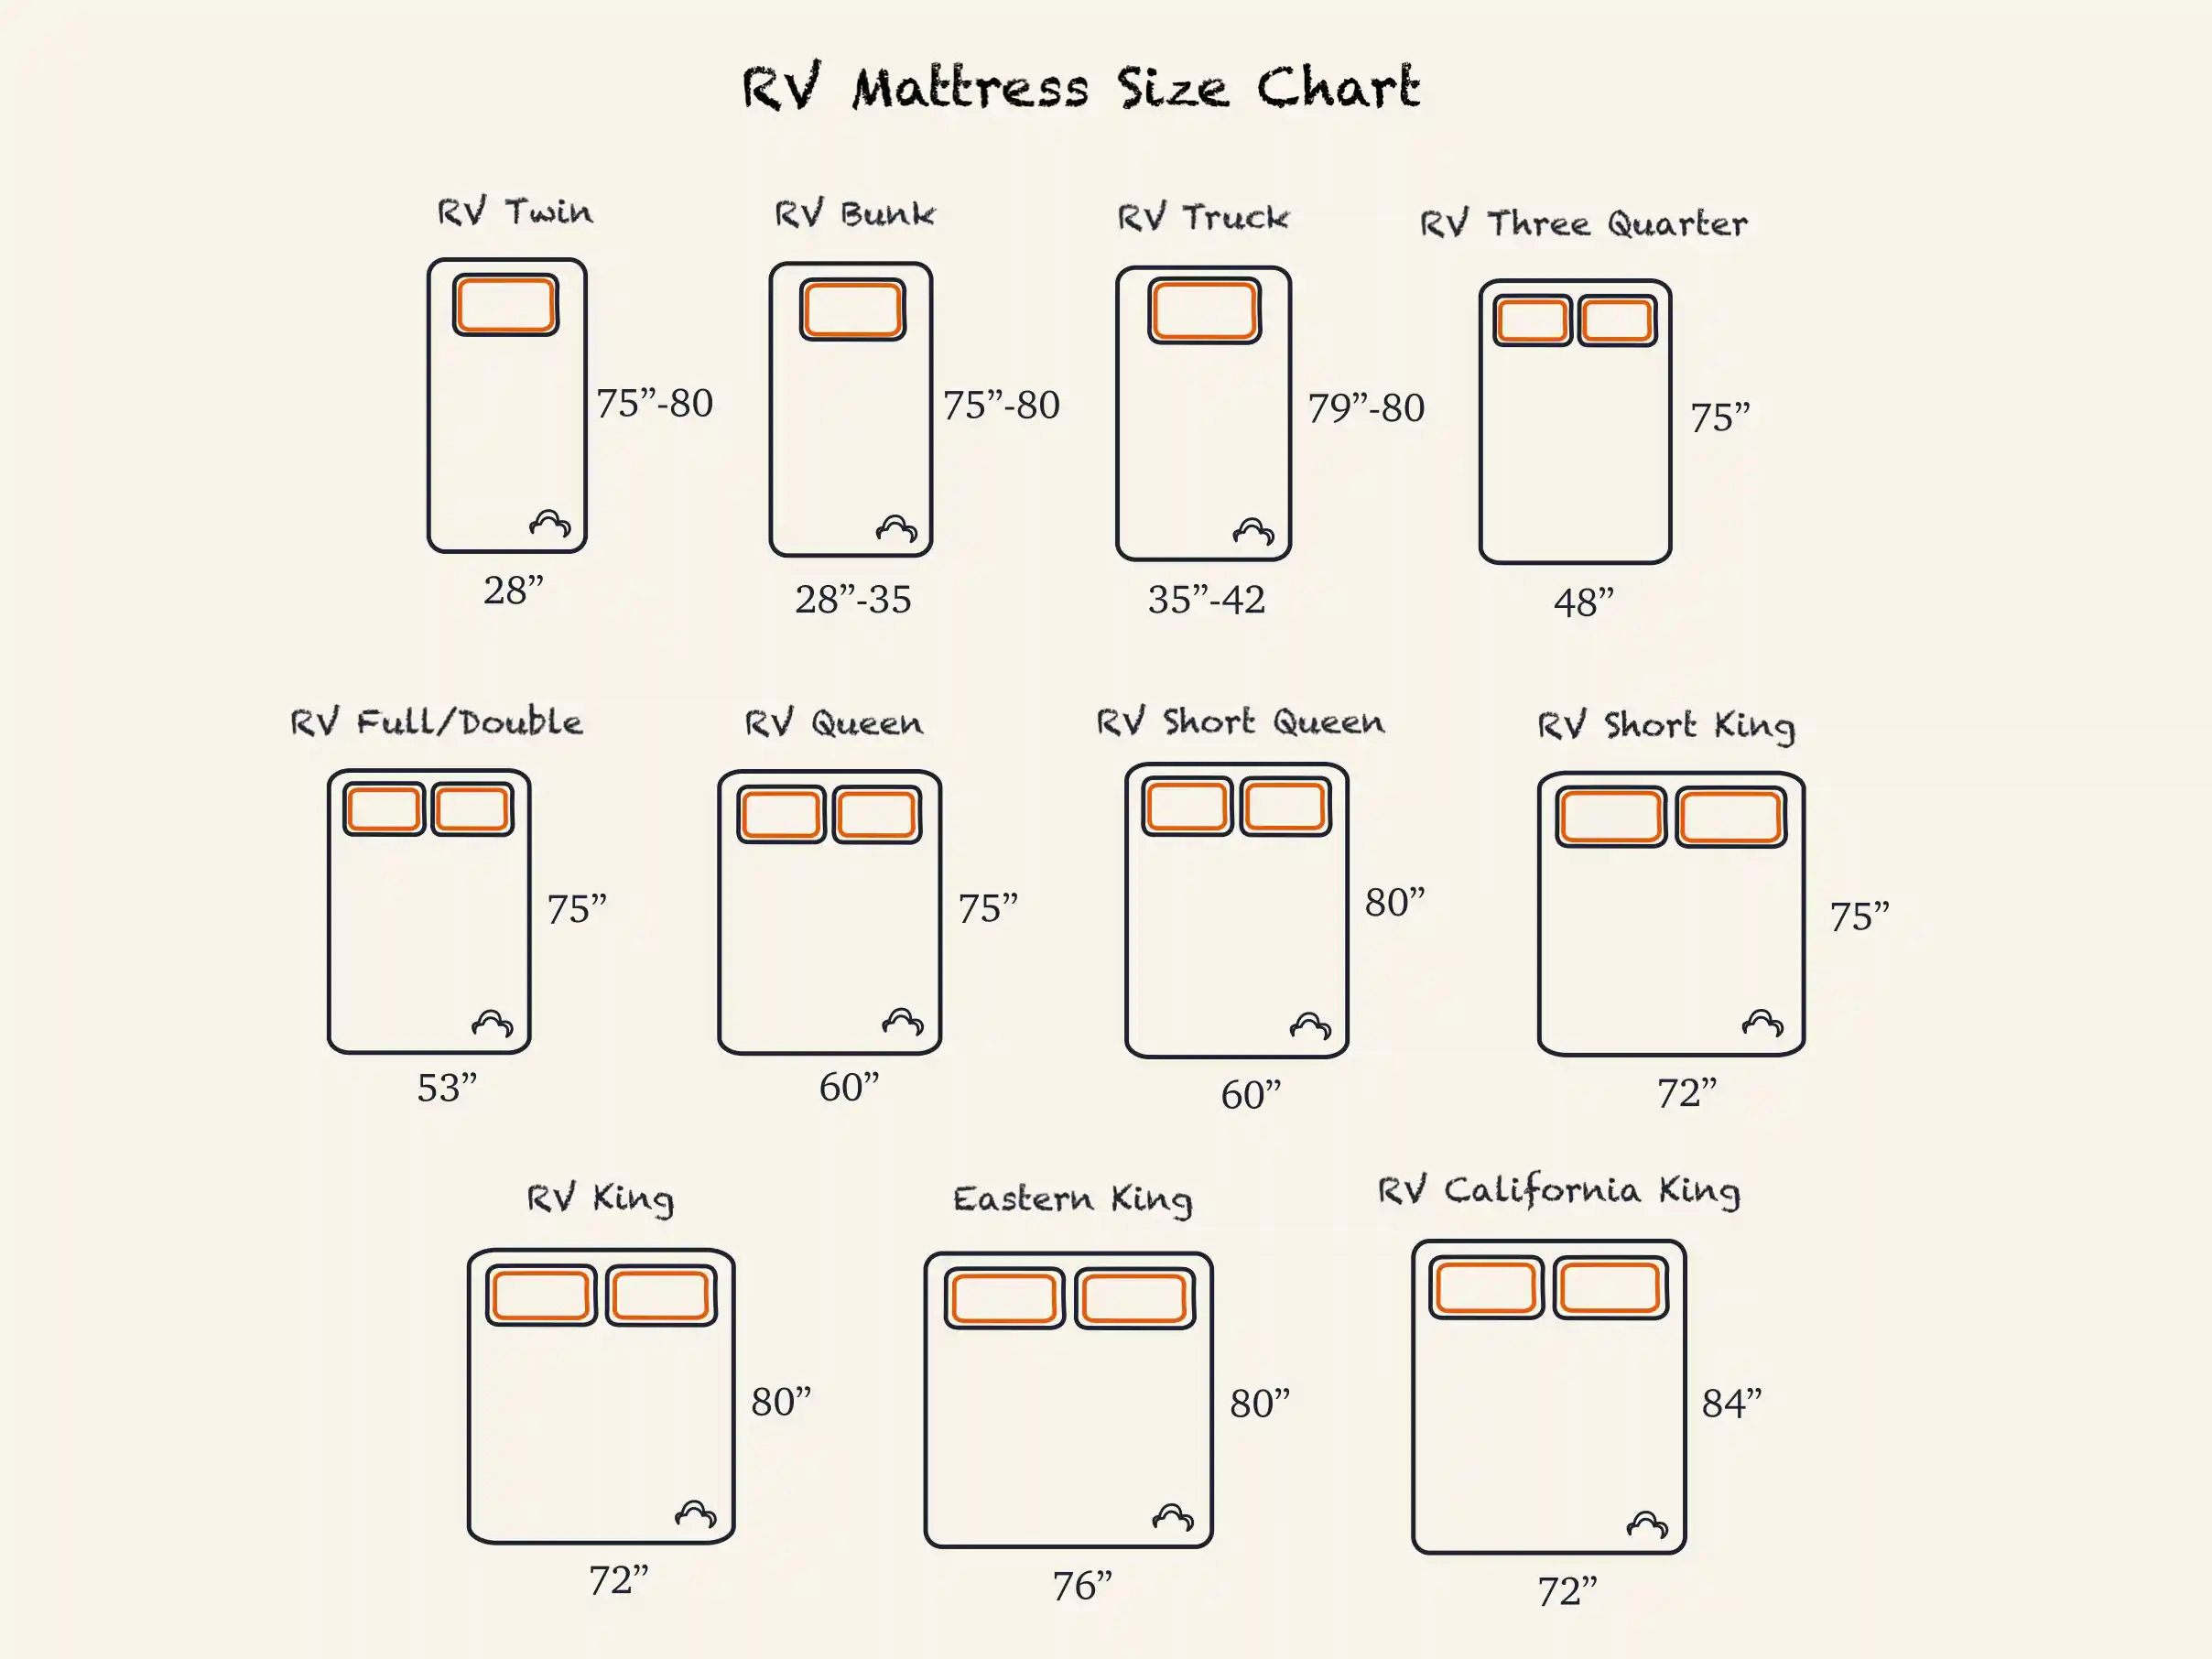 mattress sizes for rv